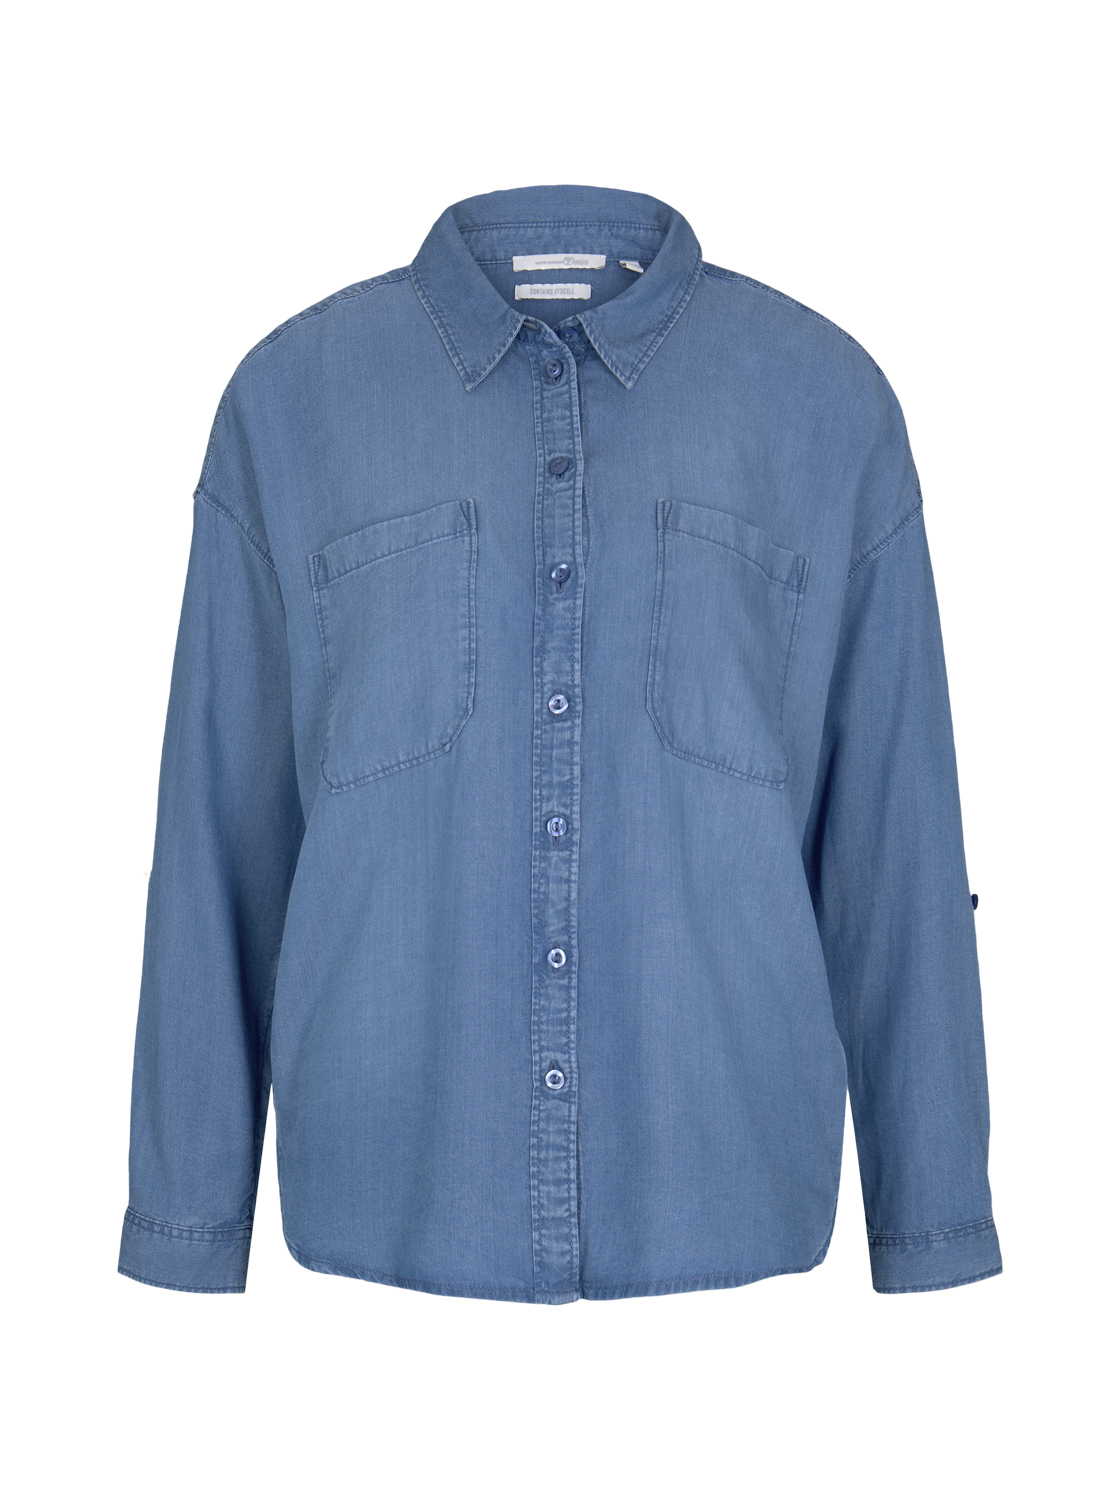 Блуза TOM TAILOR Denim Hemd BUTTON DOWN, синий футболка tom tailor размер xxl голубой синий